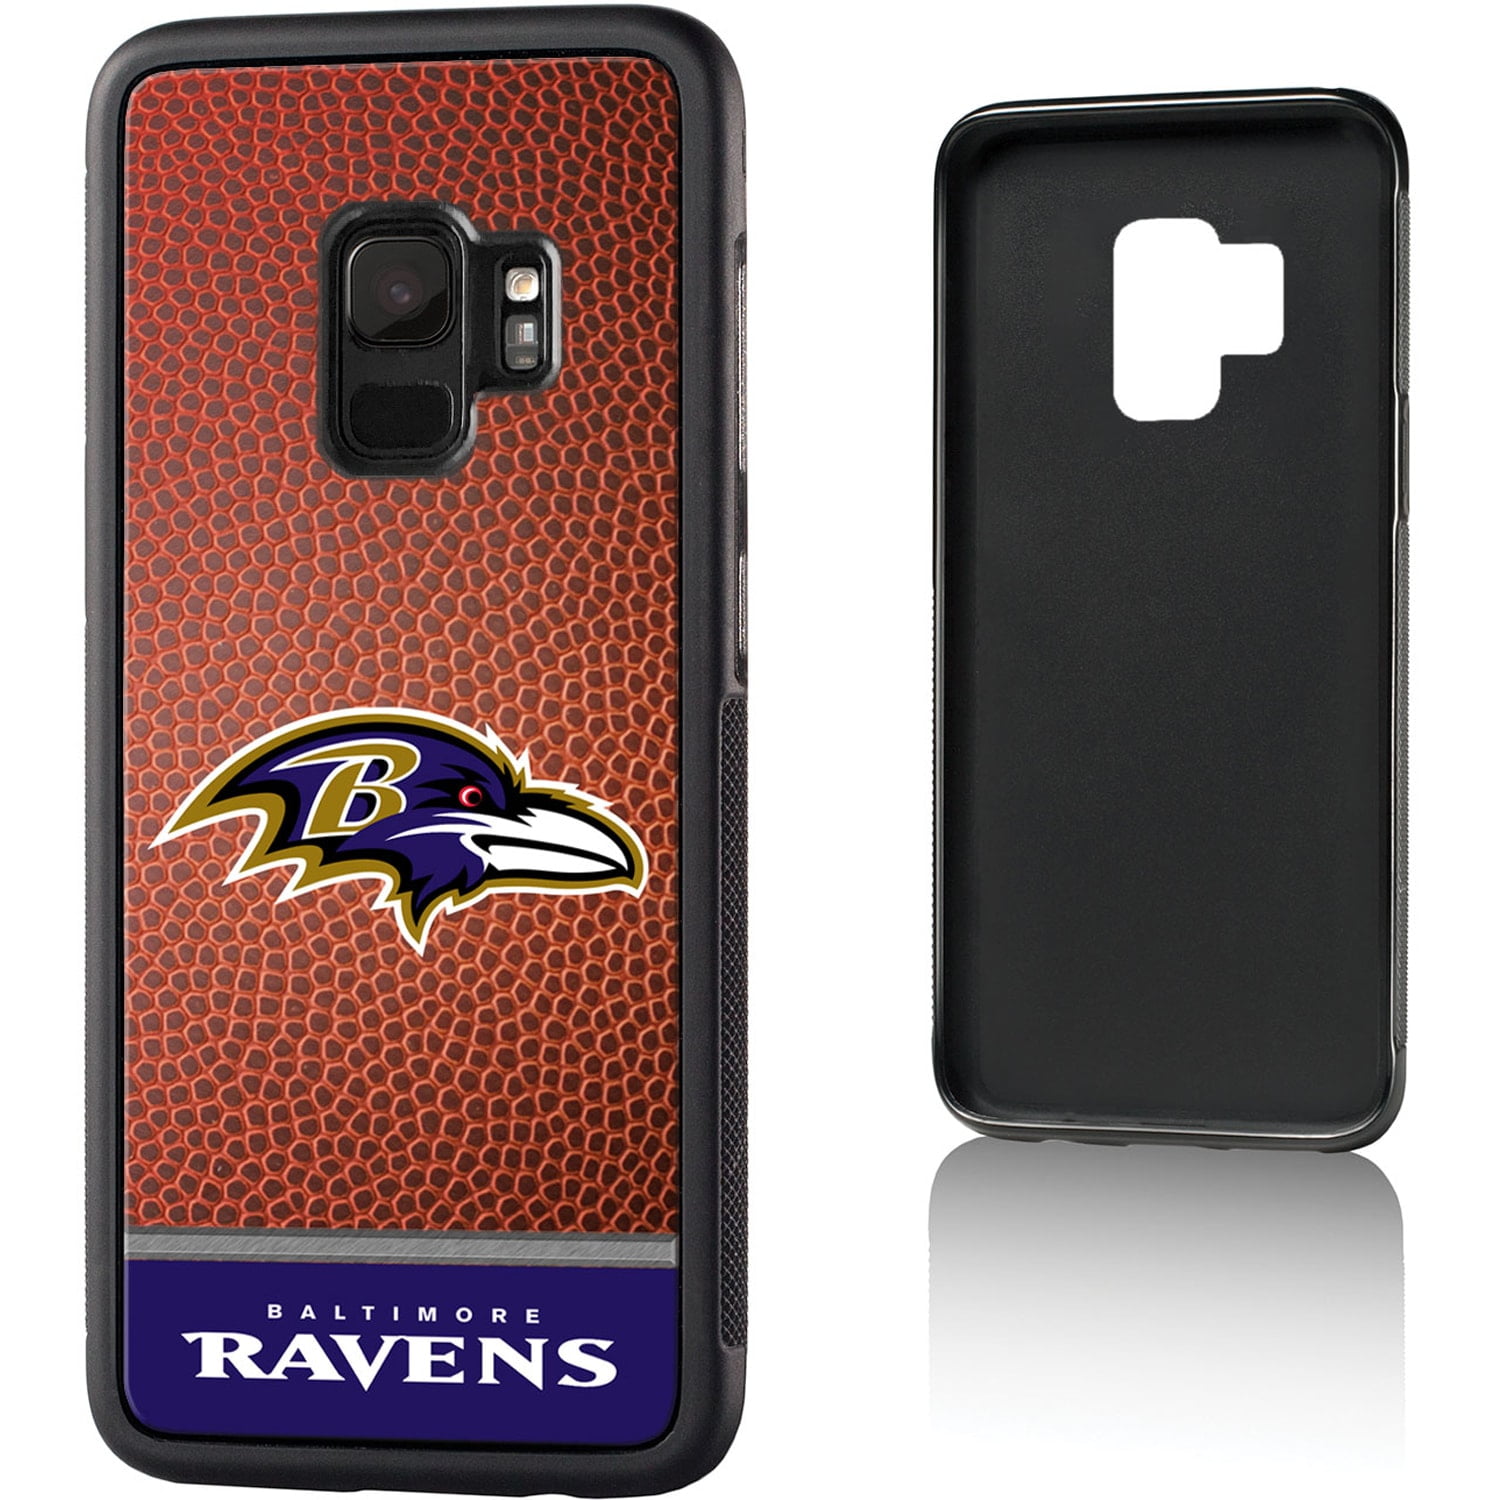 Baltimore Ravens Galaxy Bump Case with Football Design - Walmart.com